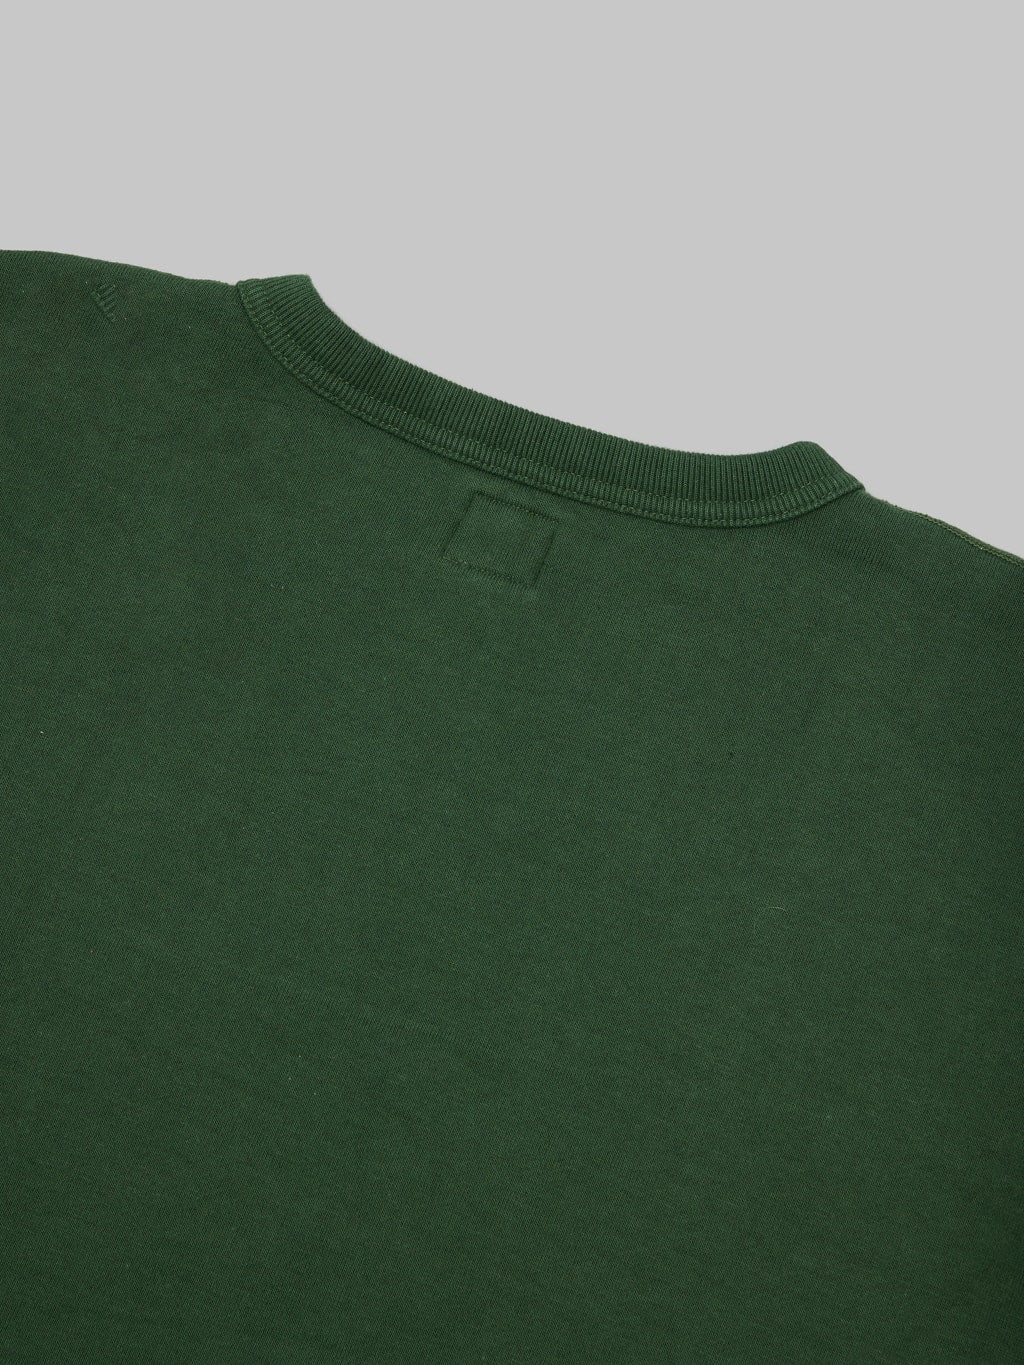 The Strike Gold Loopwheeled Sweatshirt Green back collar